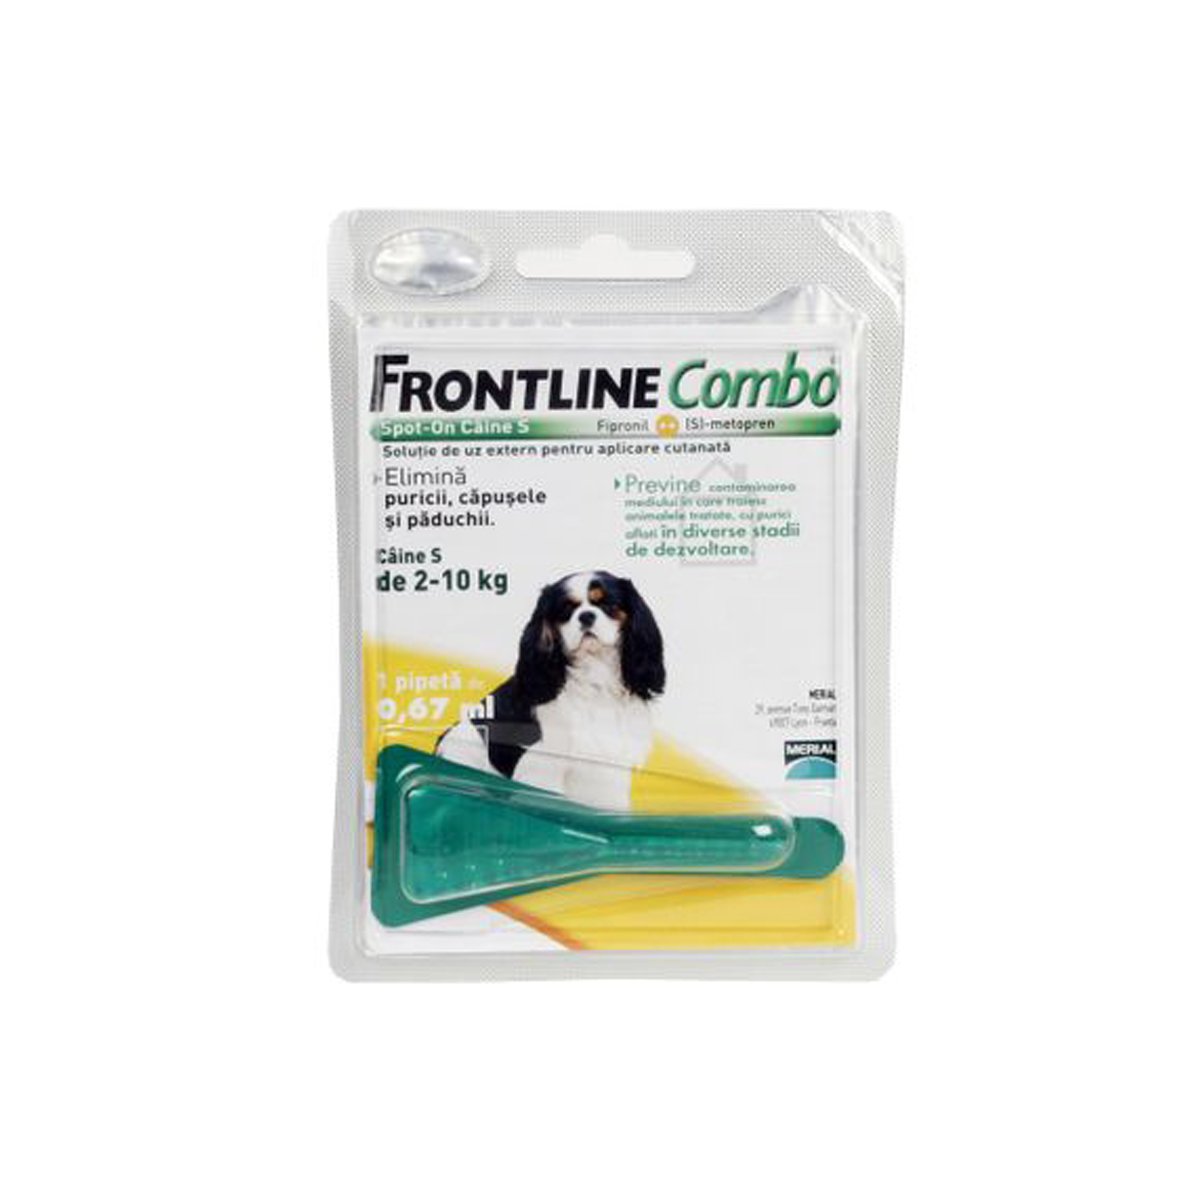 Frontline Combo pentru caini de talie mica 2-10kg, 3 pipete antiparazitare Merial